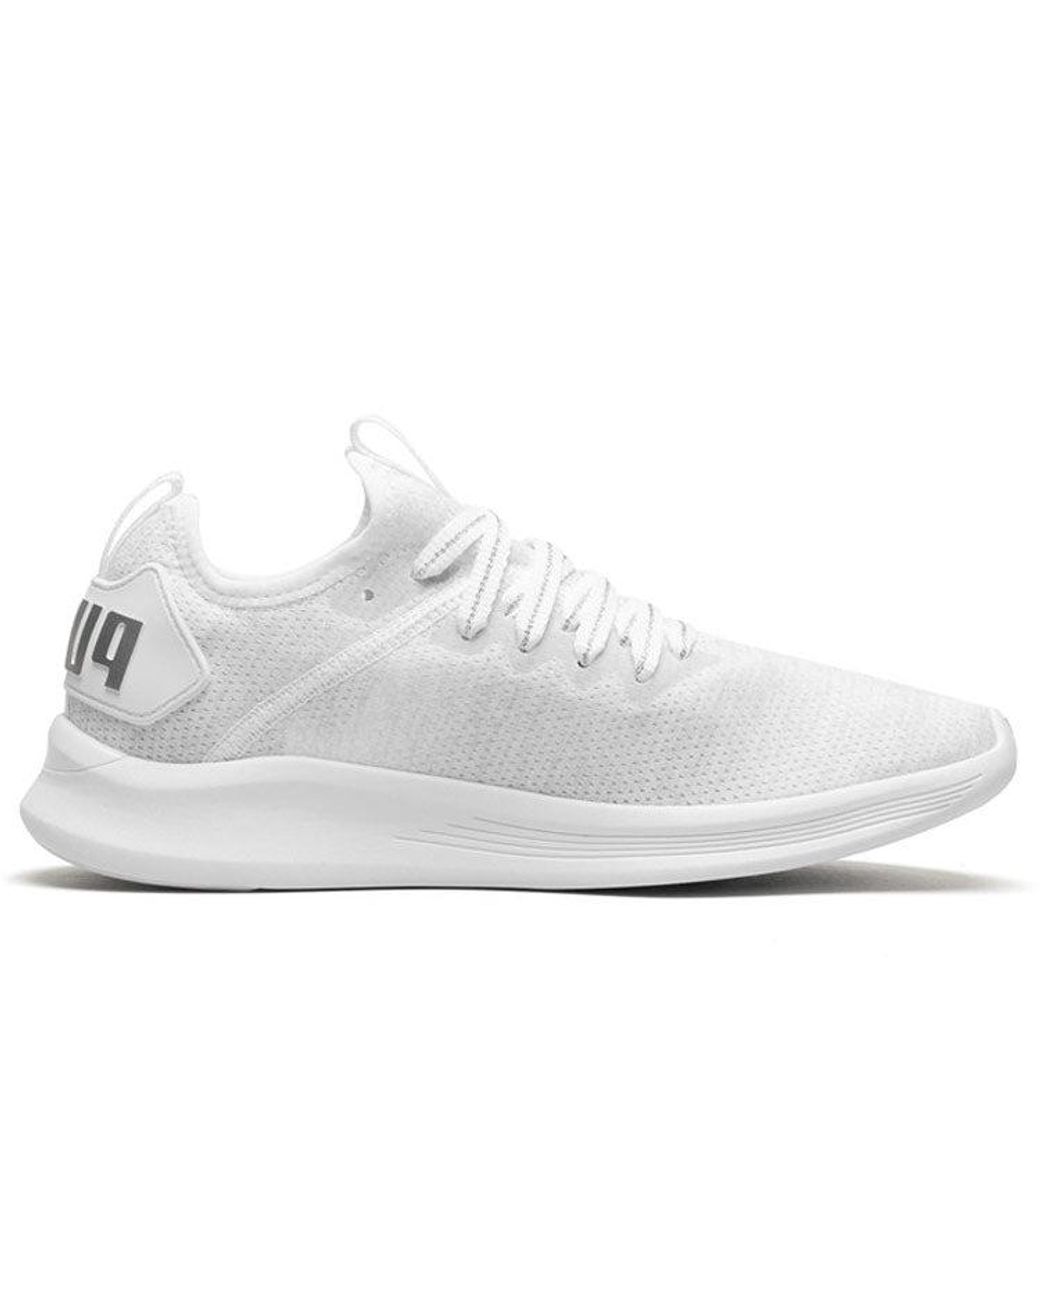 PUMA Flash Ignite Evoknit En Pointe Low-top Sneakers in White | Lyst